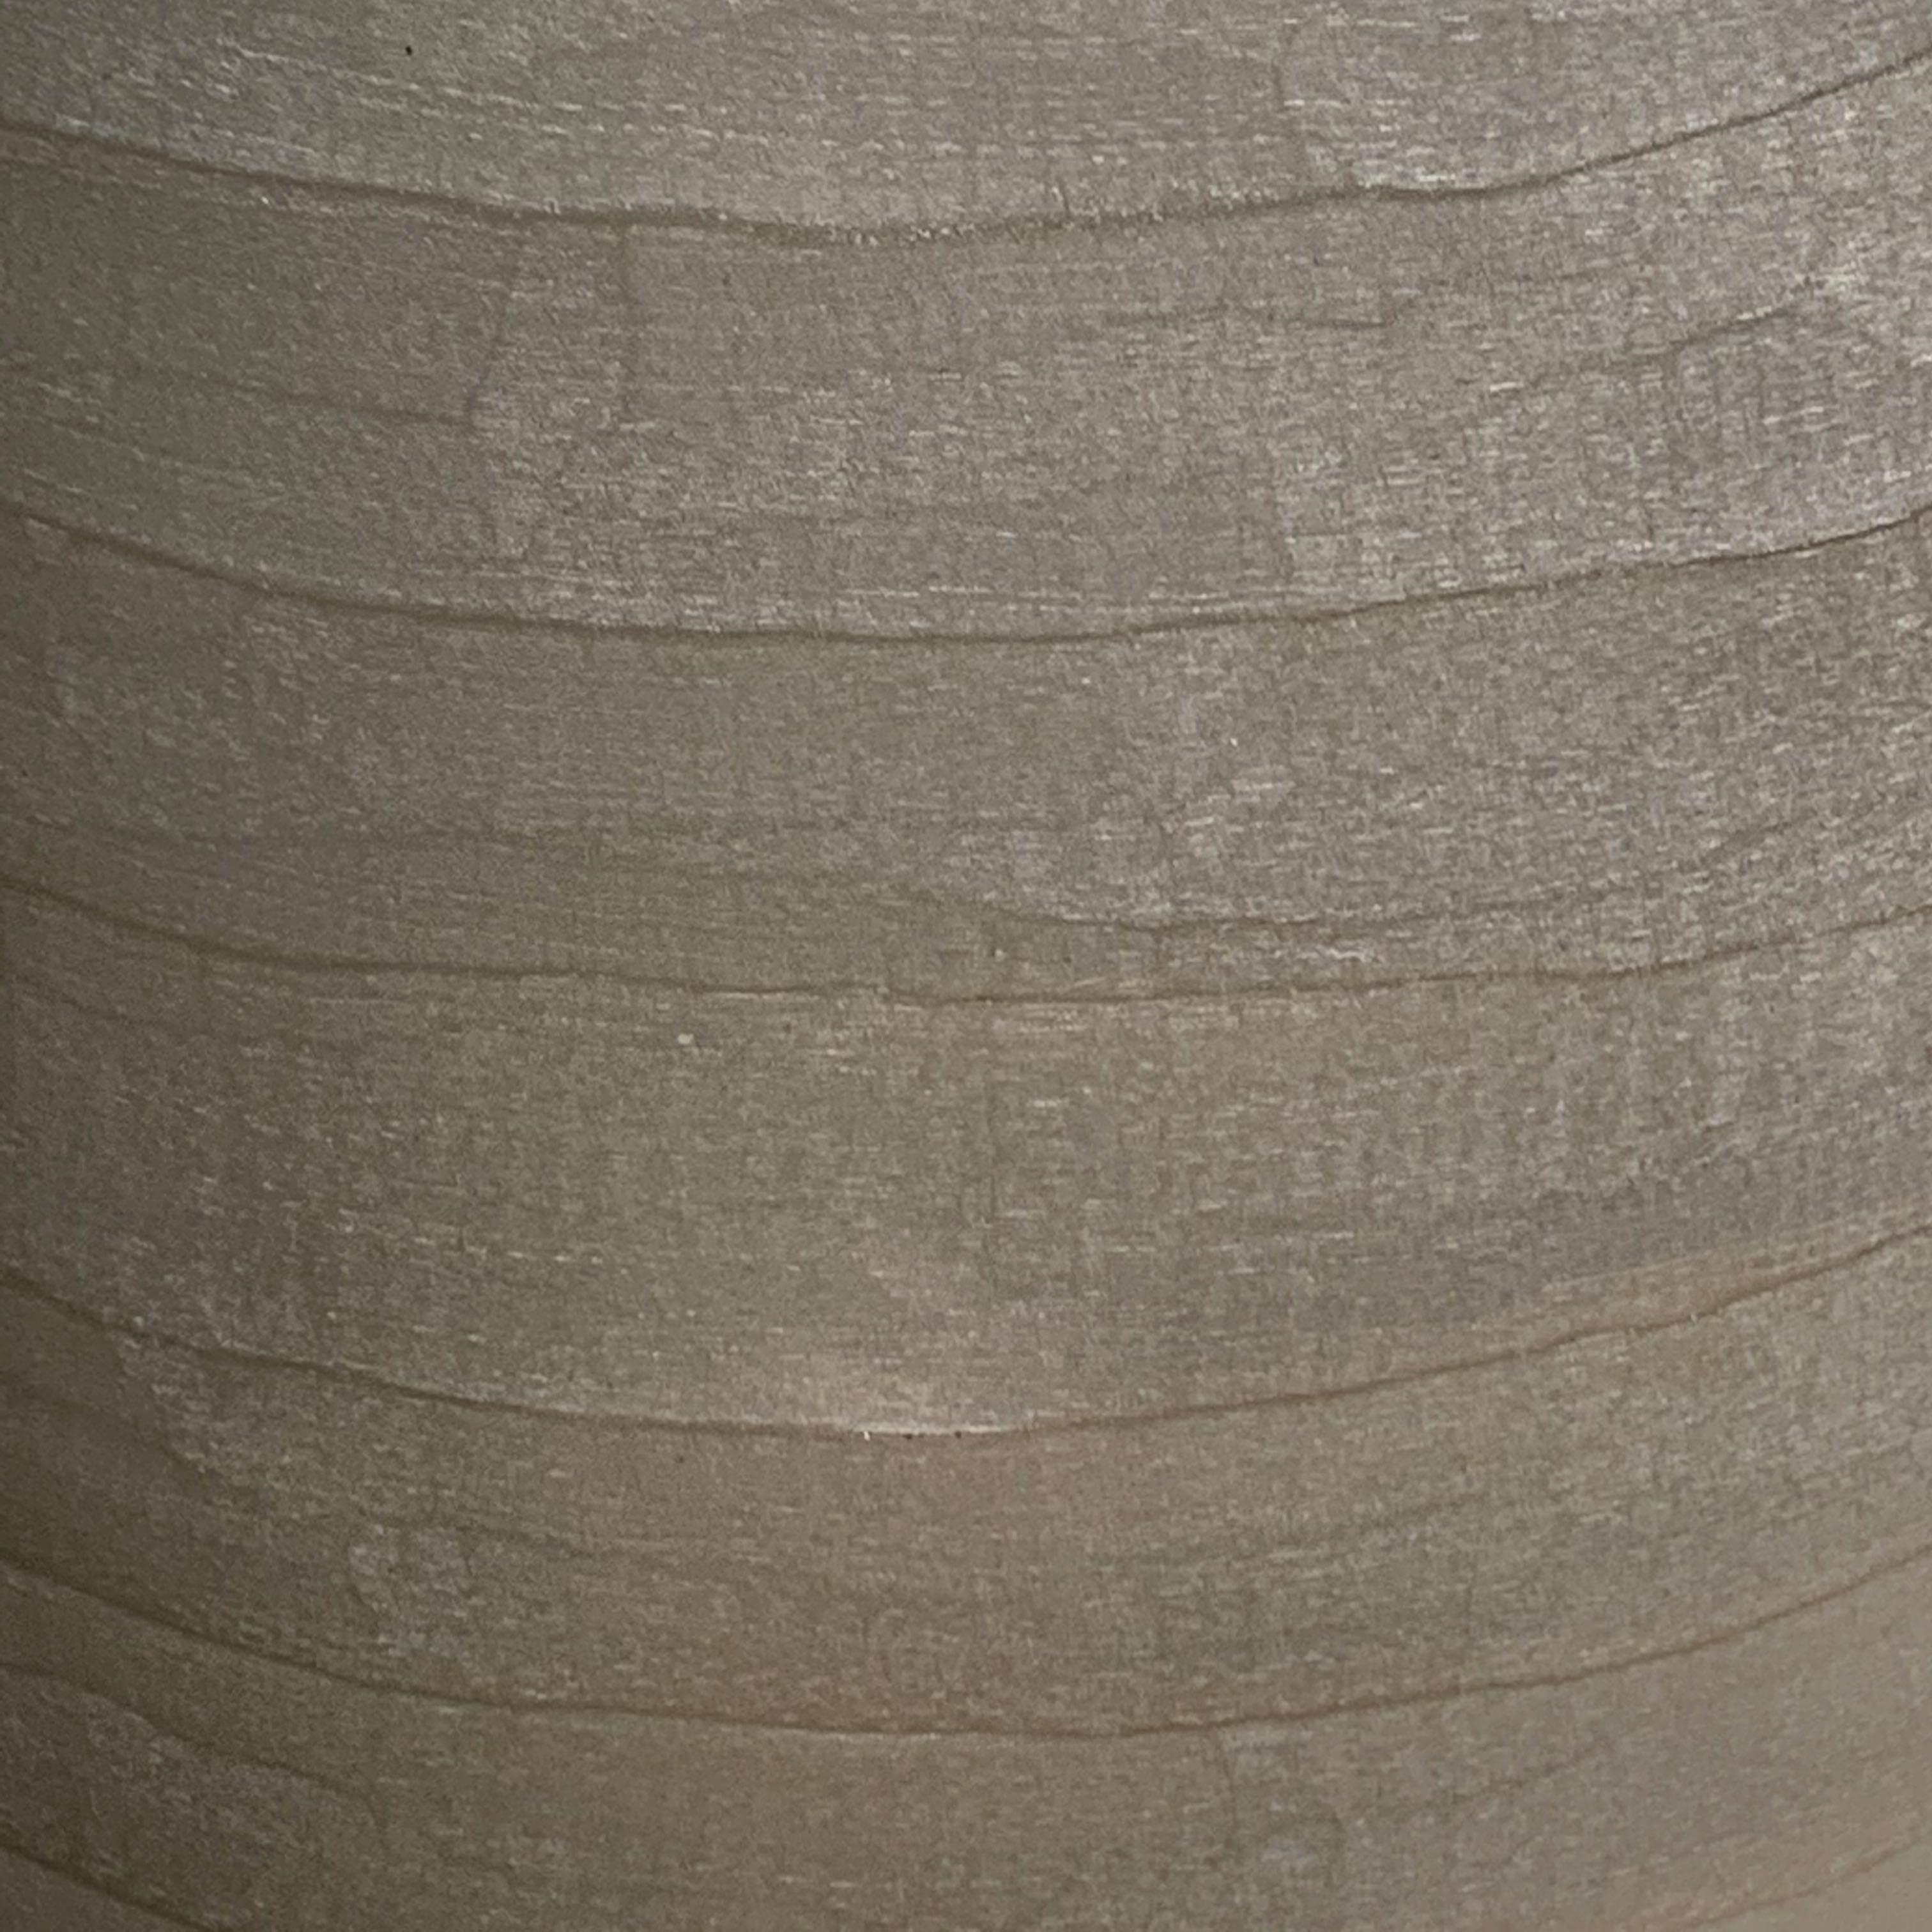 Frosted Horizontal Rib Glass Vase, Romania, Contemporary